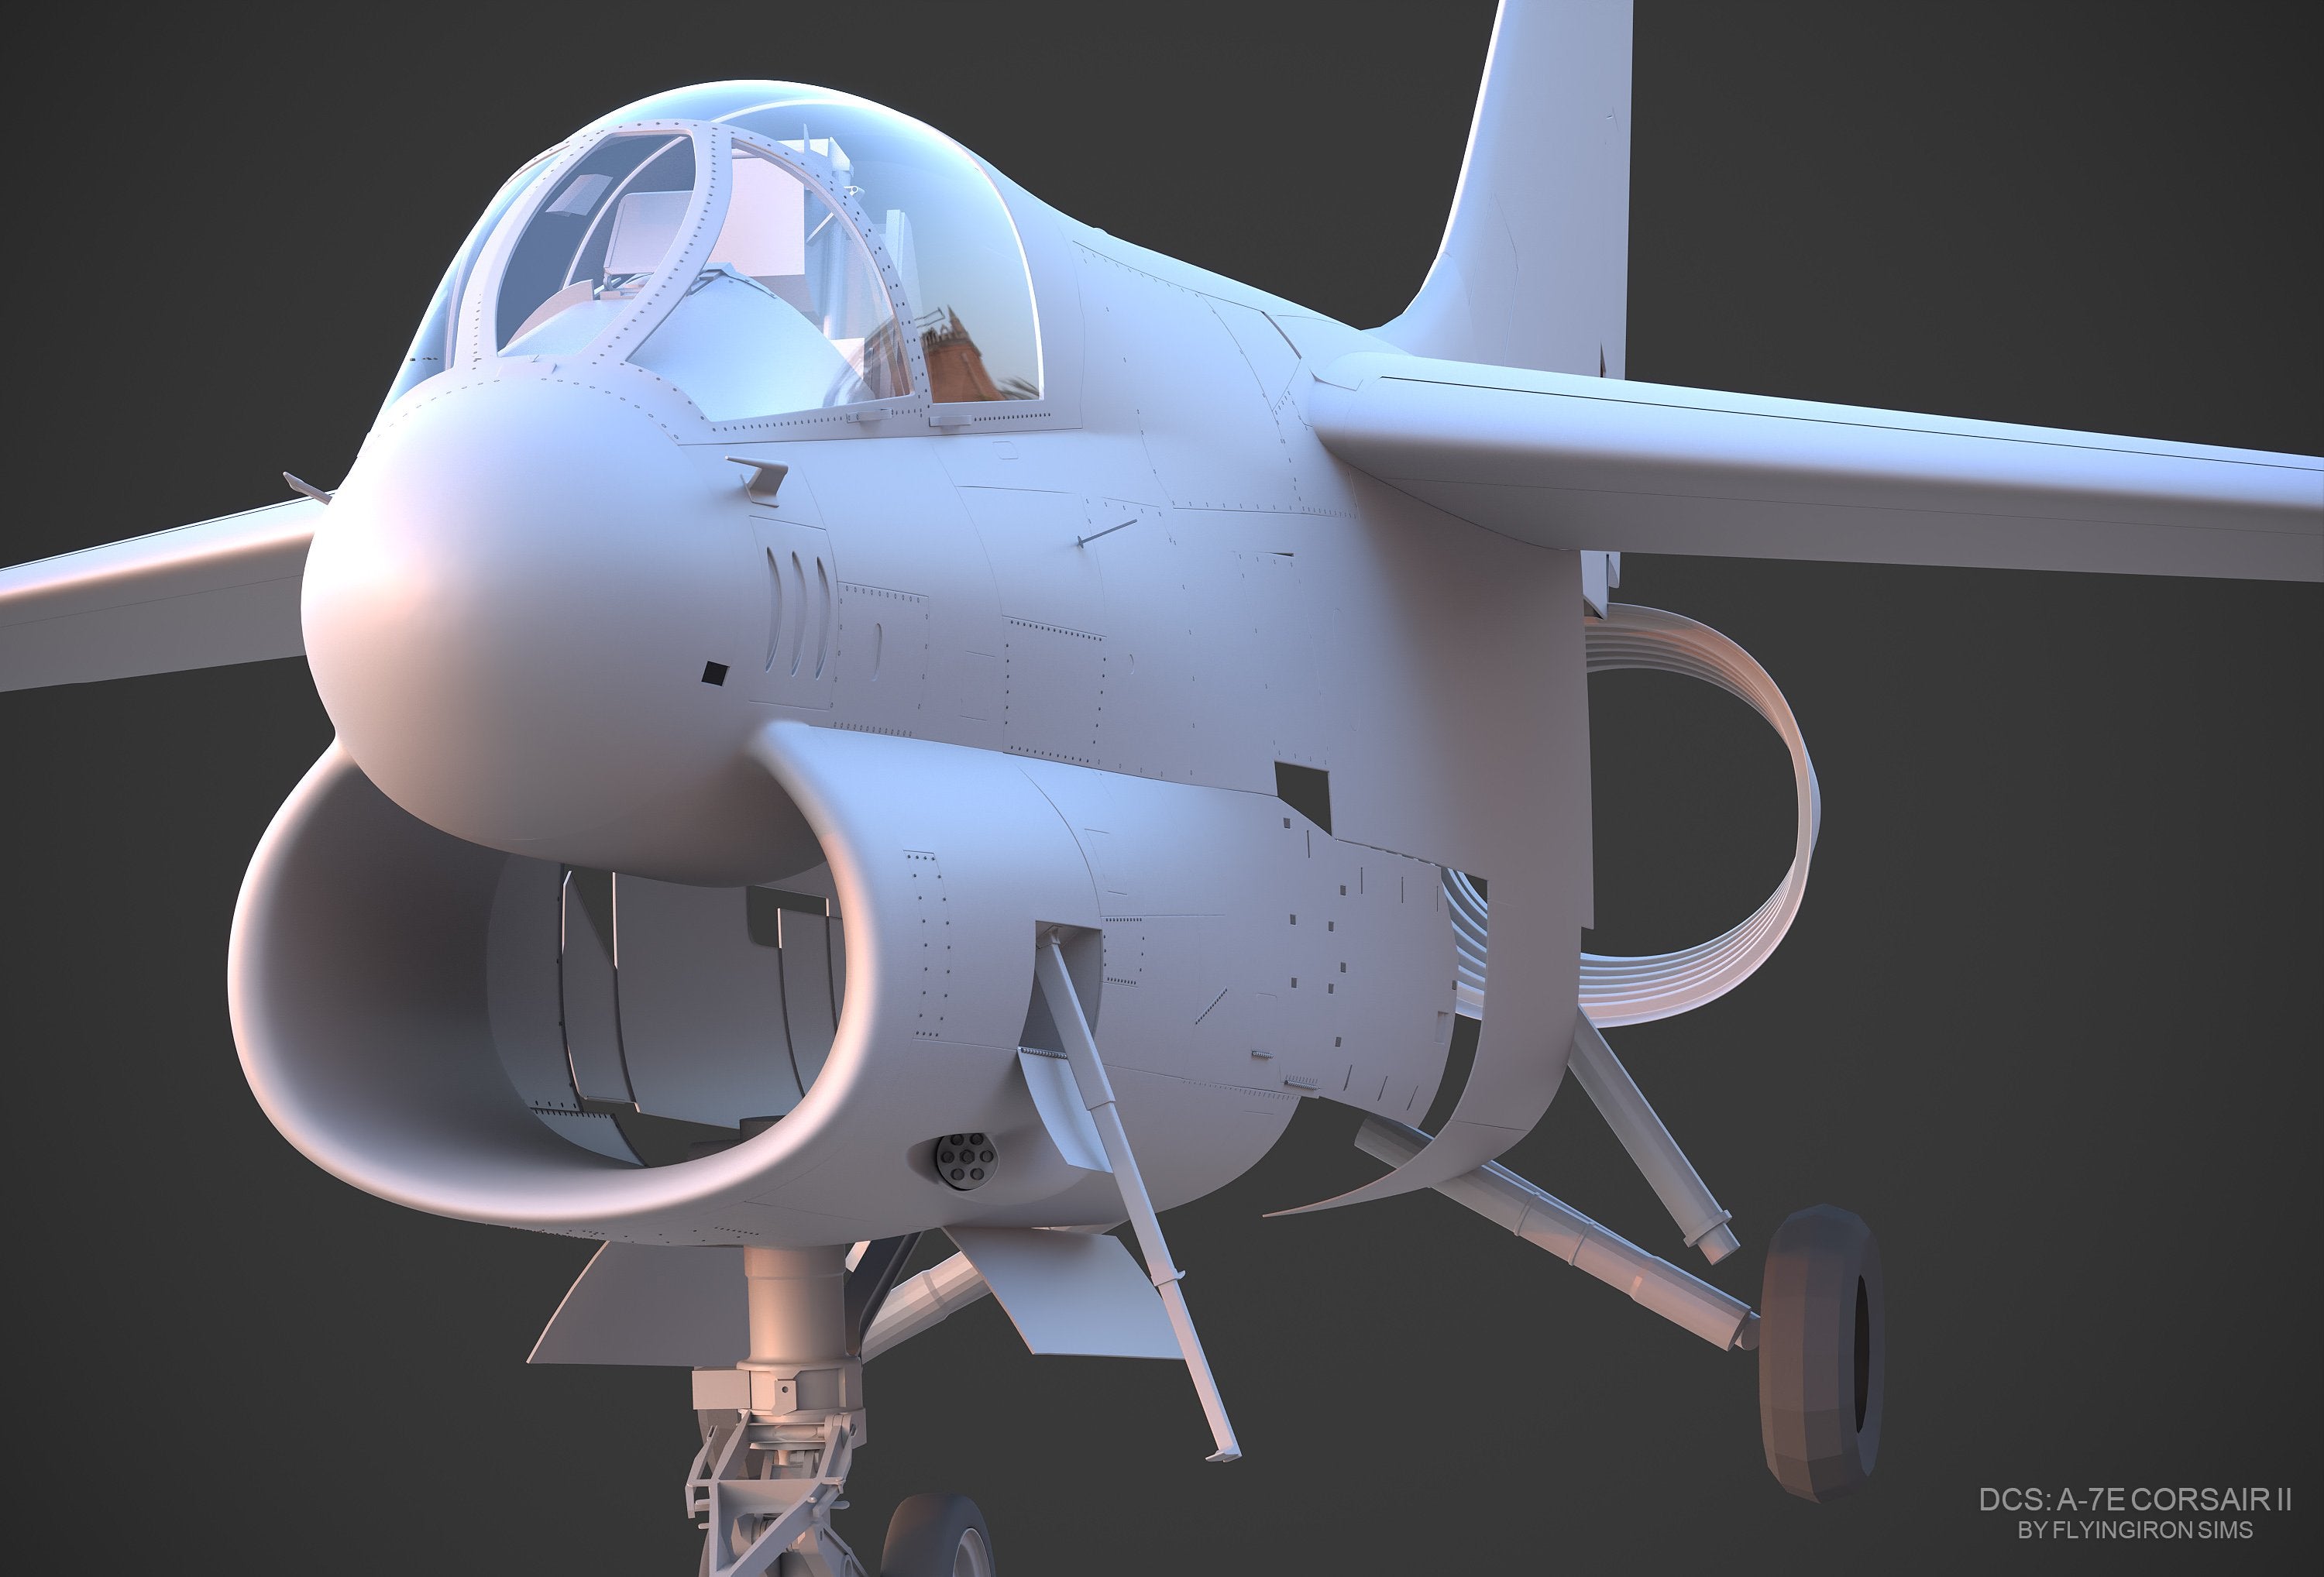 DCS: A-7E Corsair II Development Update – FlyingIron Simulations